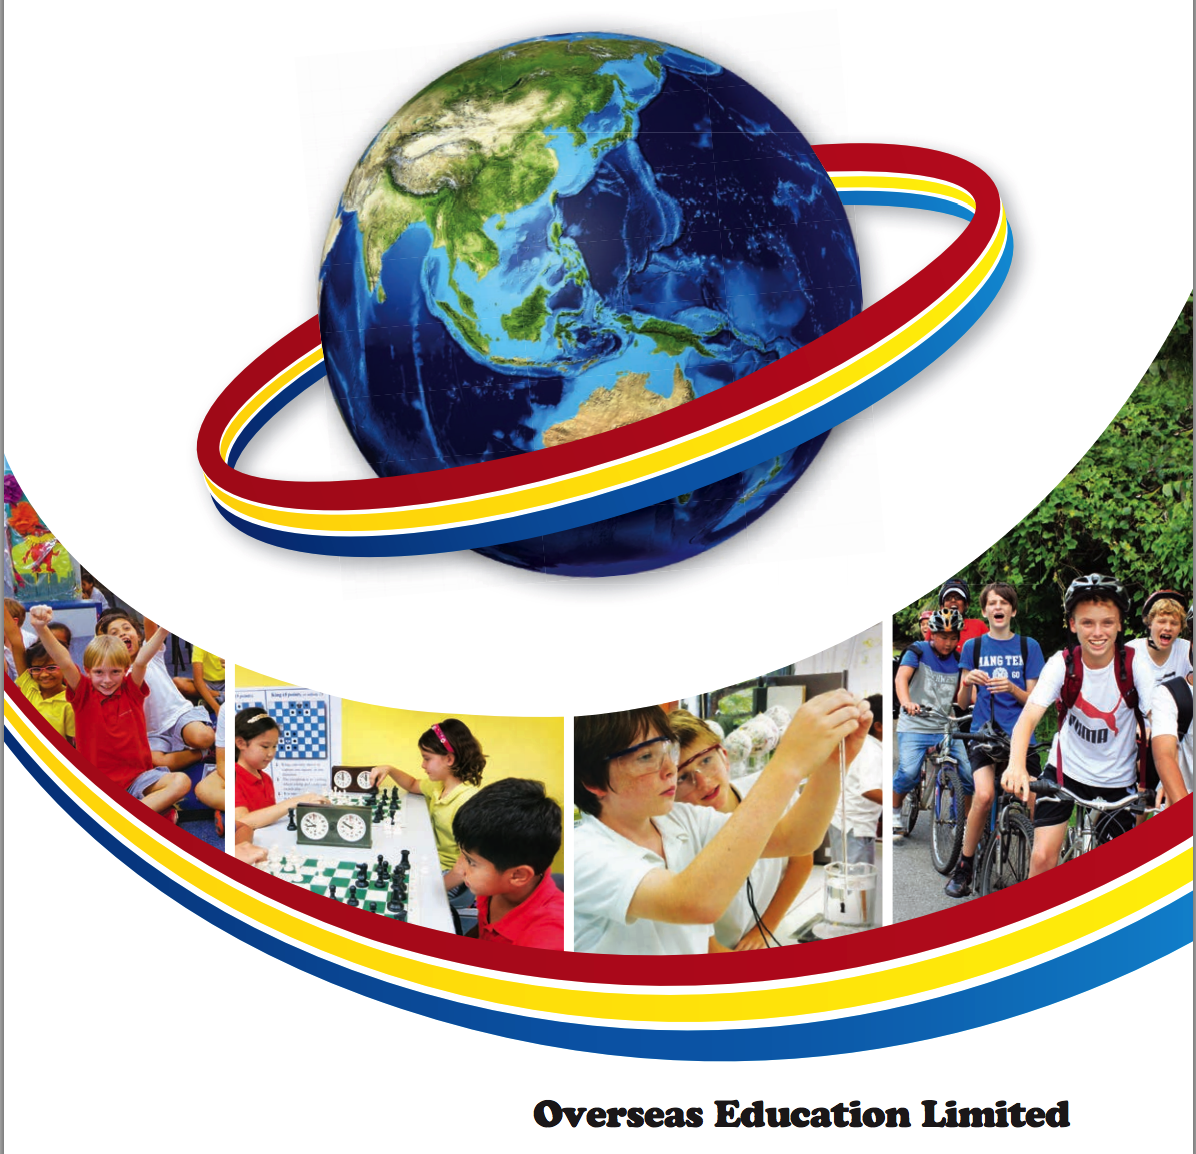 Overseas Education Ltd - CIMB Research 2015-11-16: Bring the kids to school!